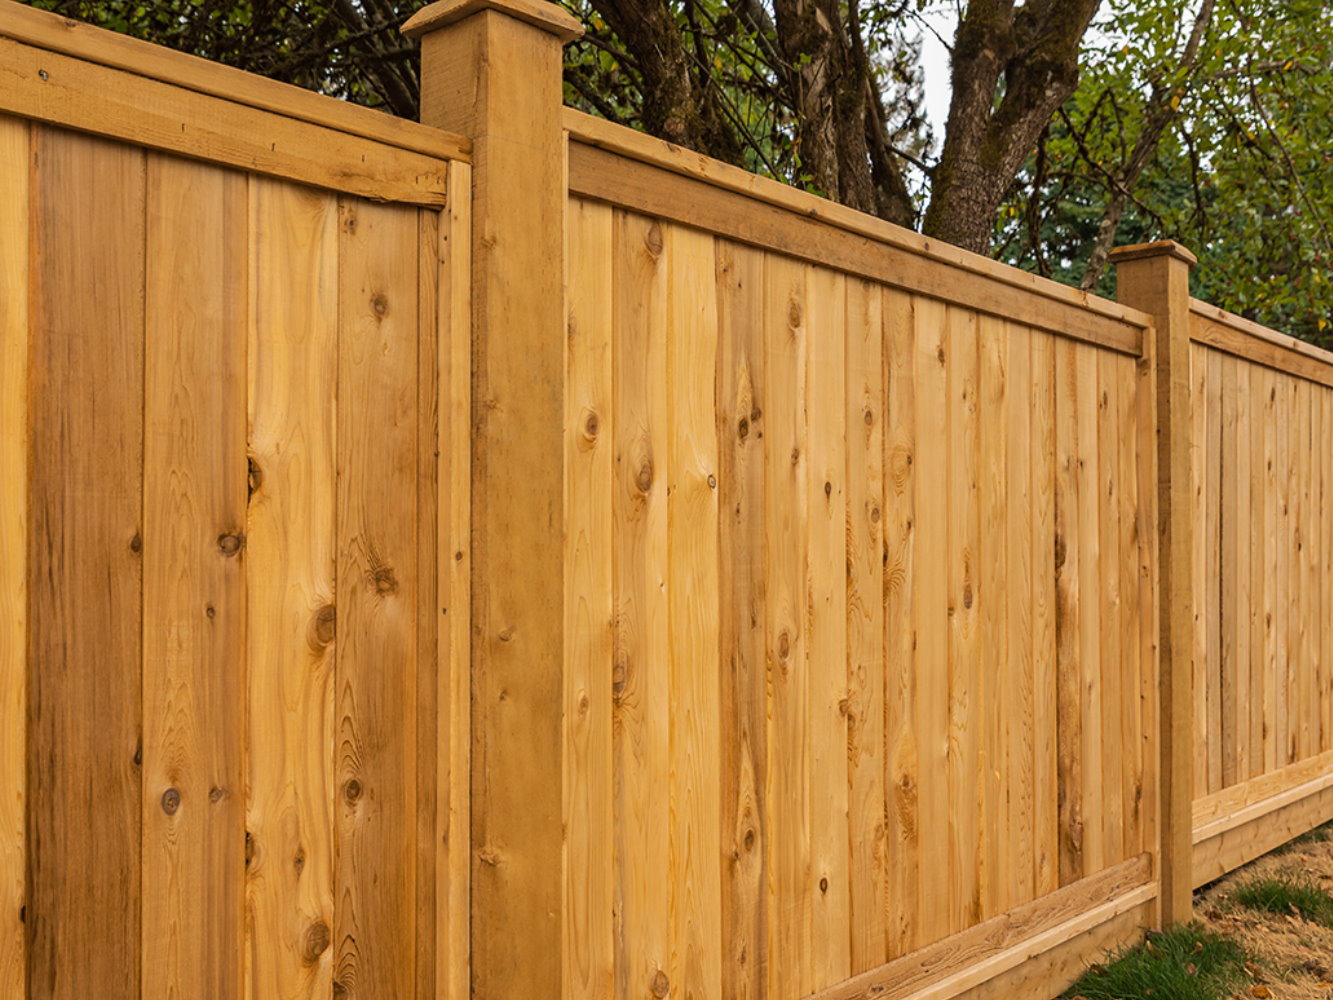 Jesup GA cap and trim style wood fence